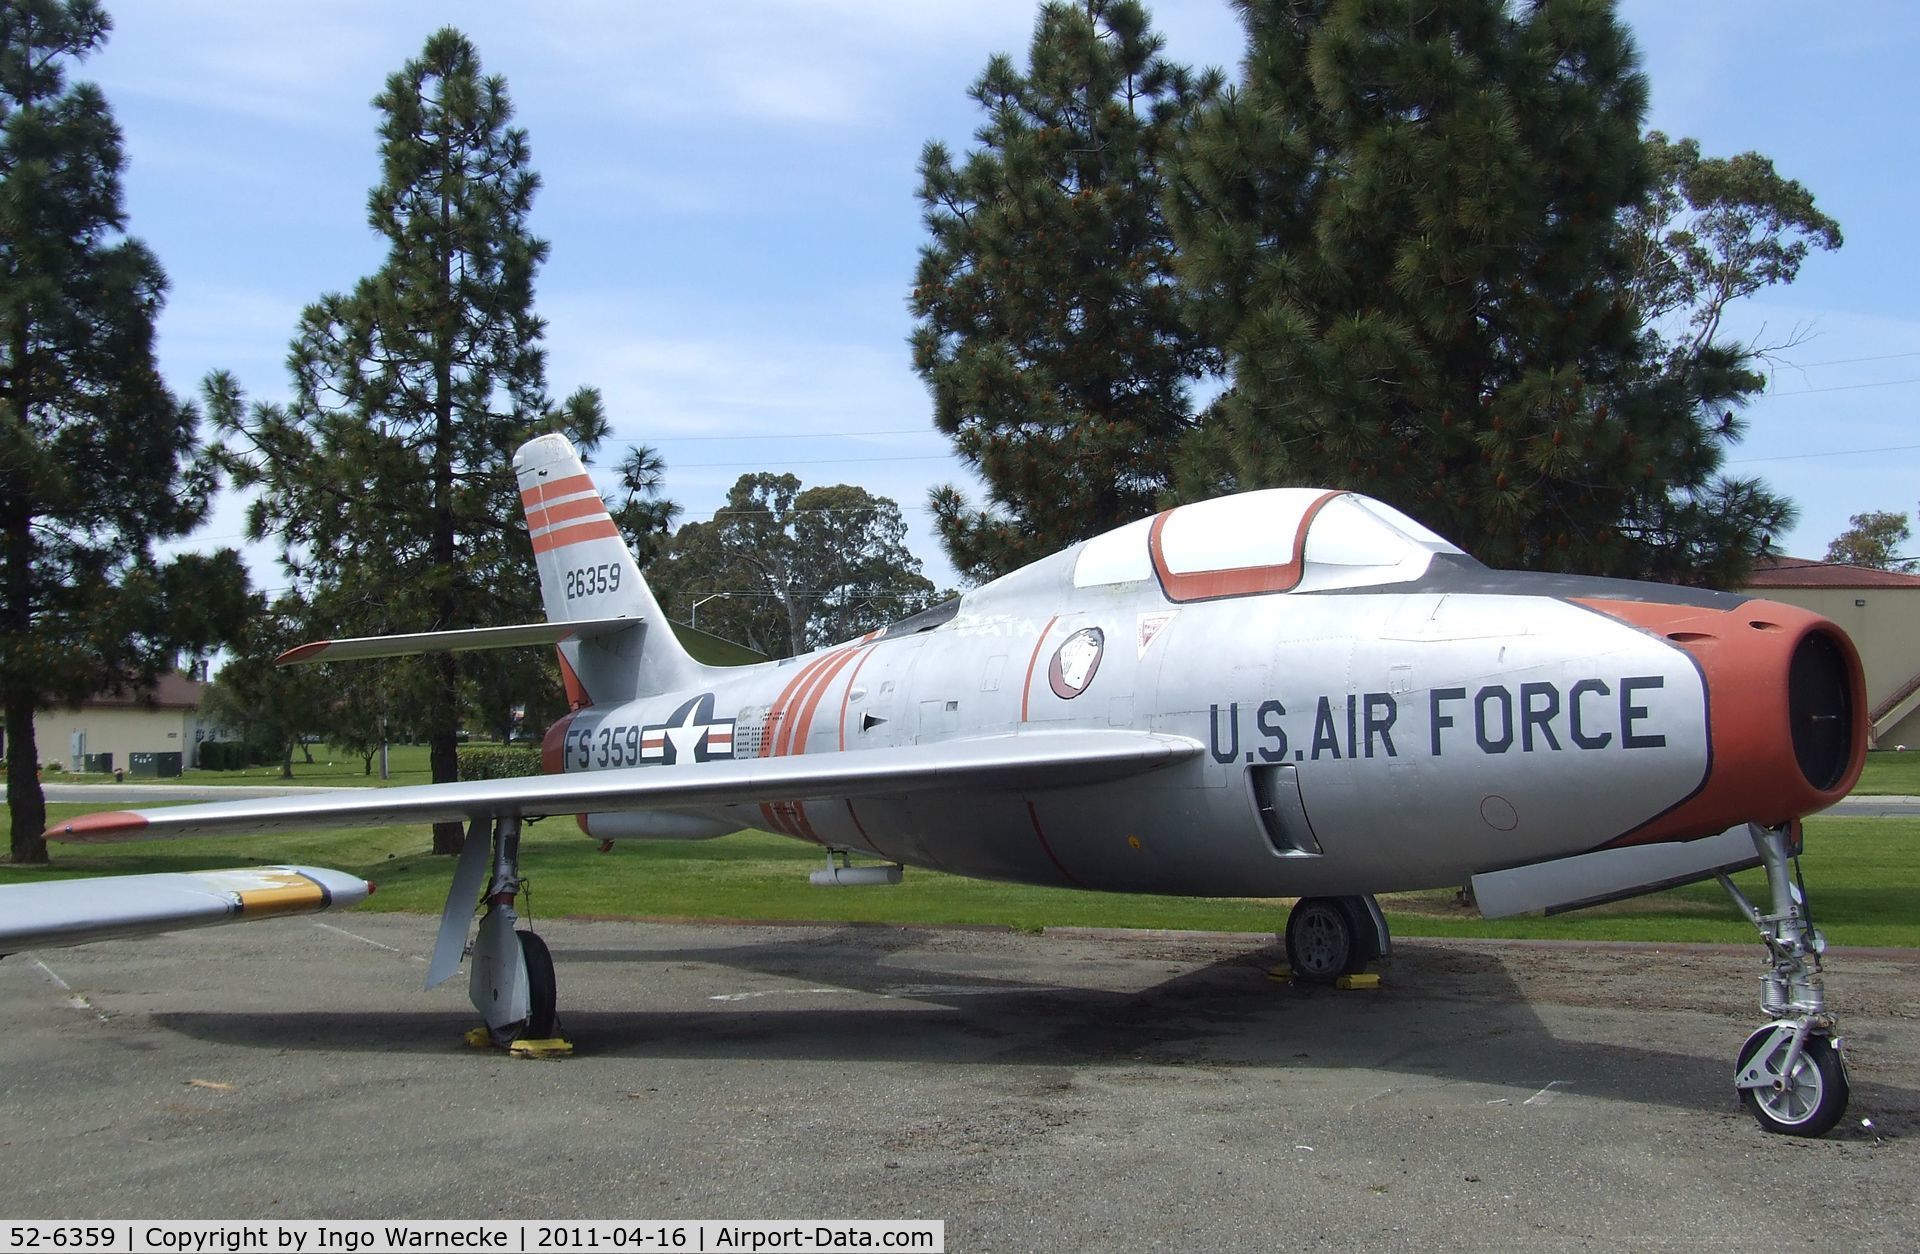 52-6359, Republic F-84F Thunderstreak C/N Not found 52-6359, Republic F-84F Thunderstreak at the Travis Air Museum, Travis AFB Fairfield CA